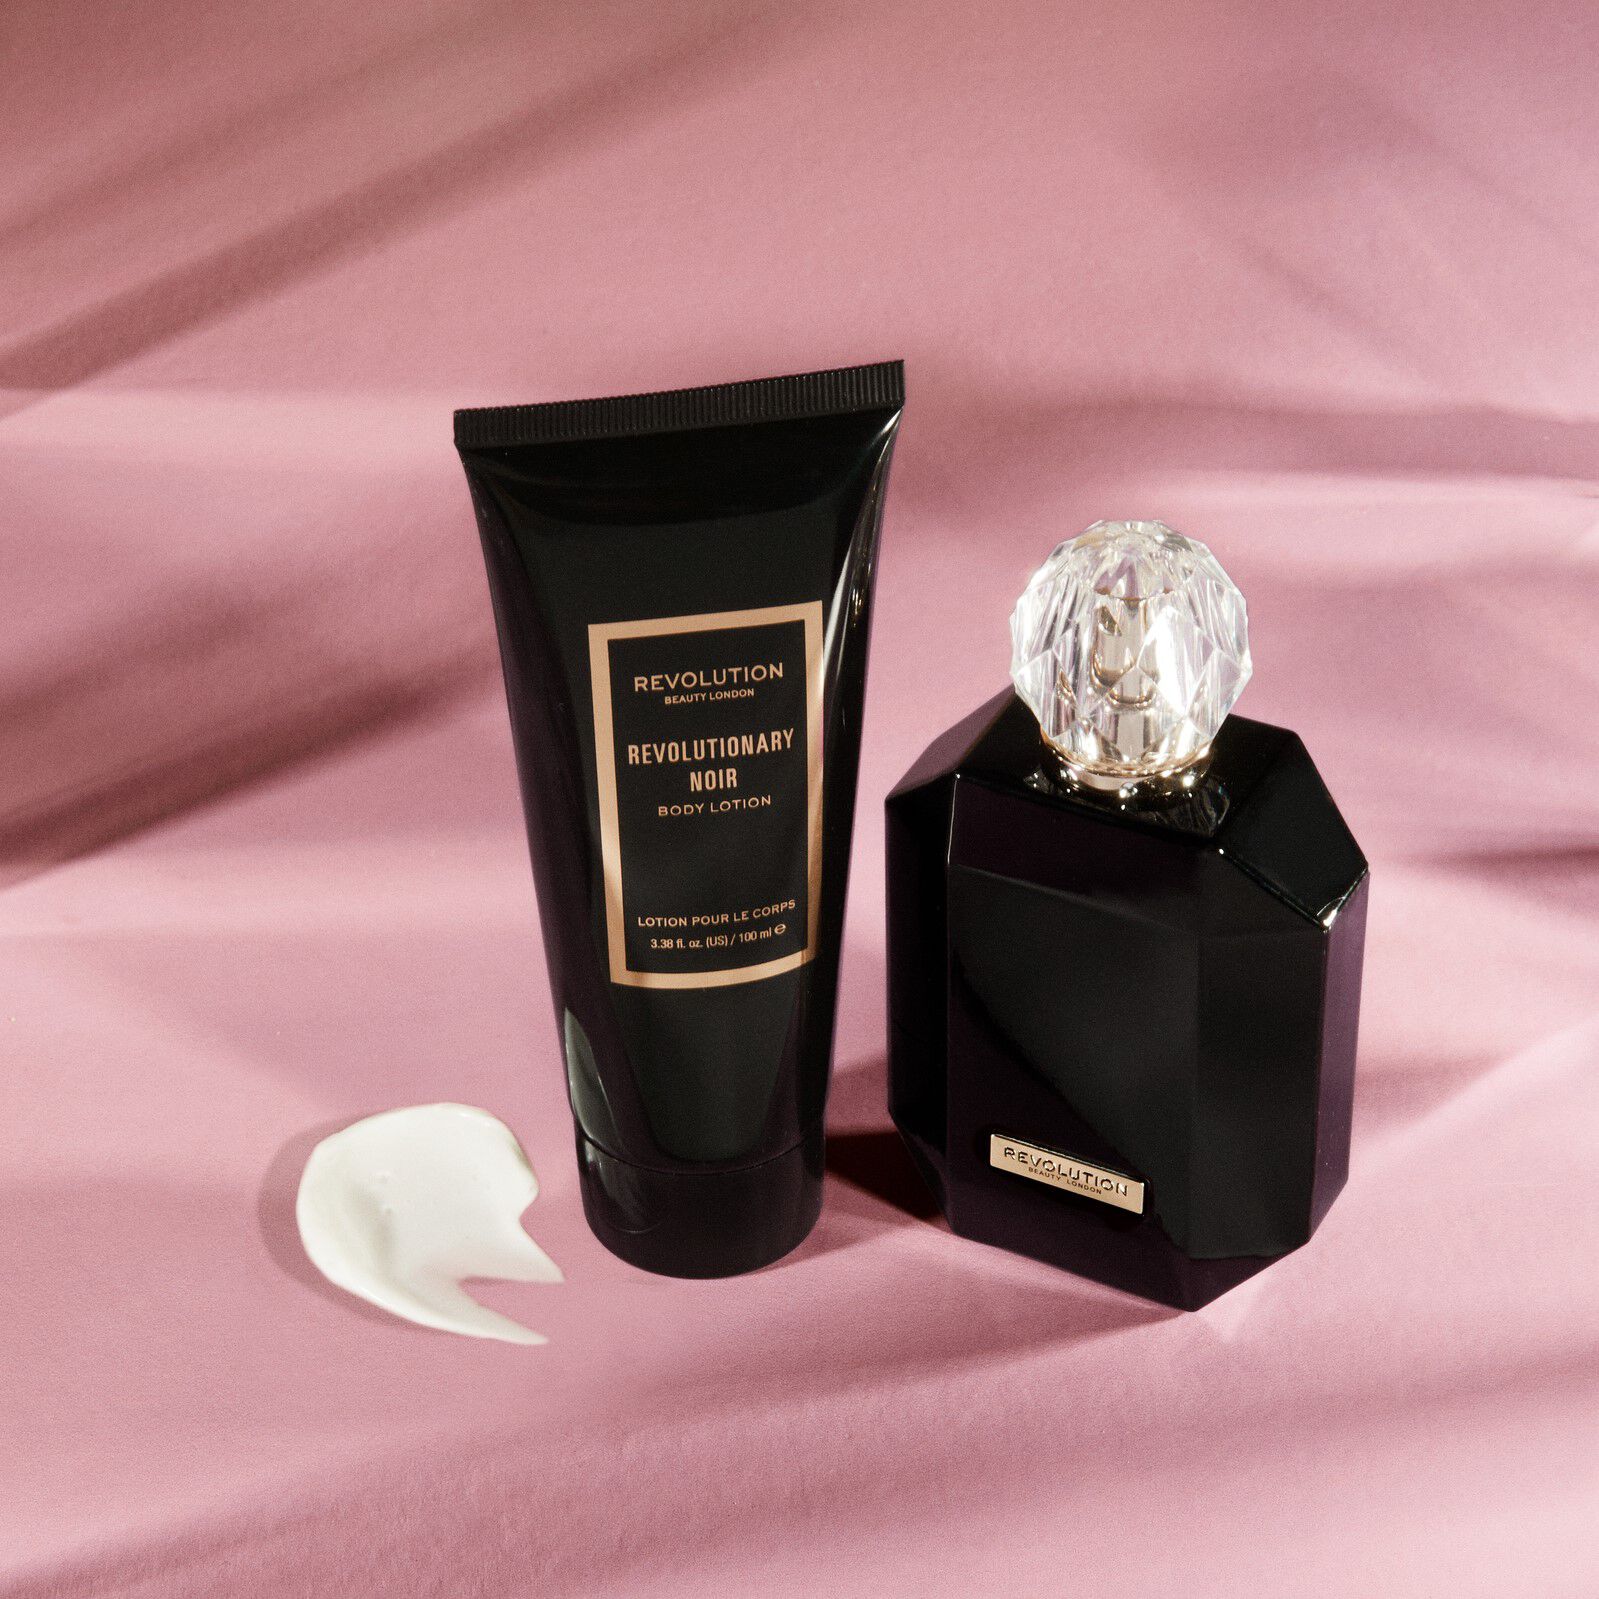 Makeup Revolution Revolutionary Noir Eau De Toilette & Body Lotion Gift Set, products with swatches